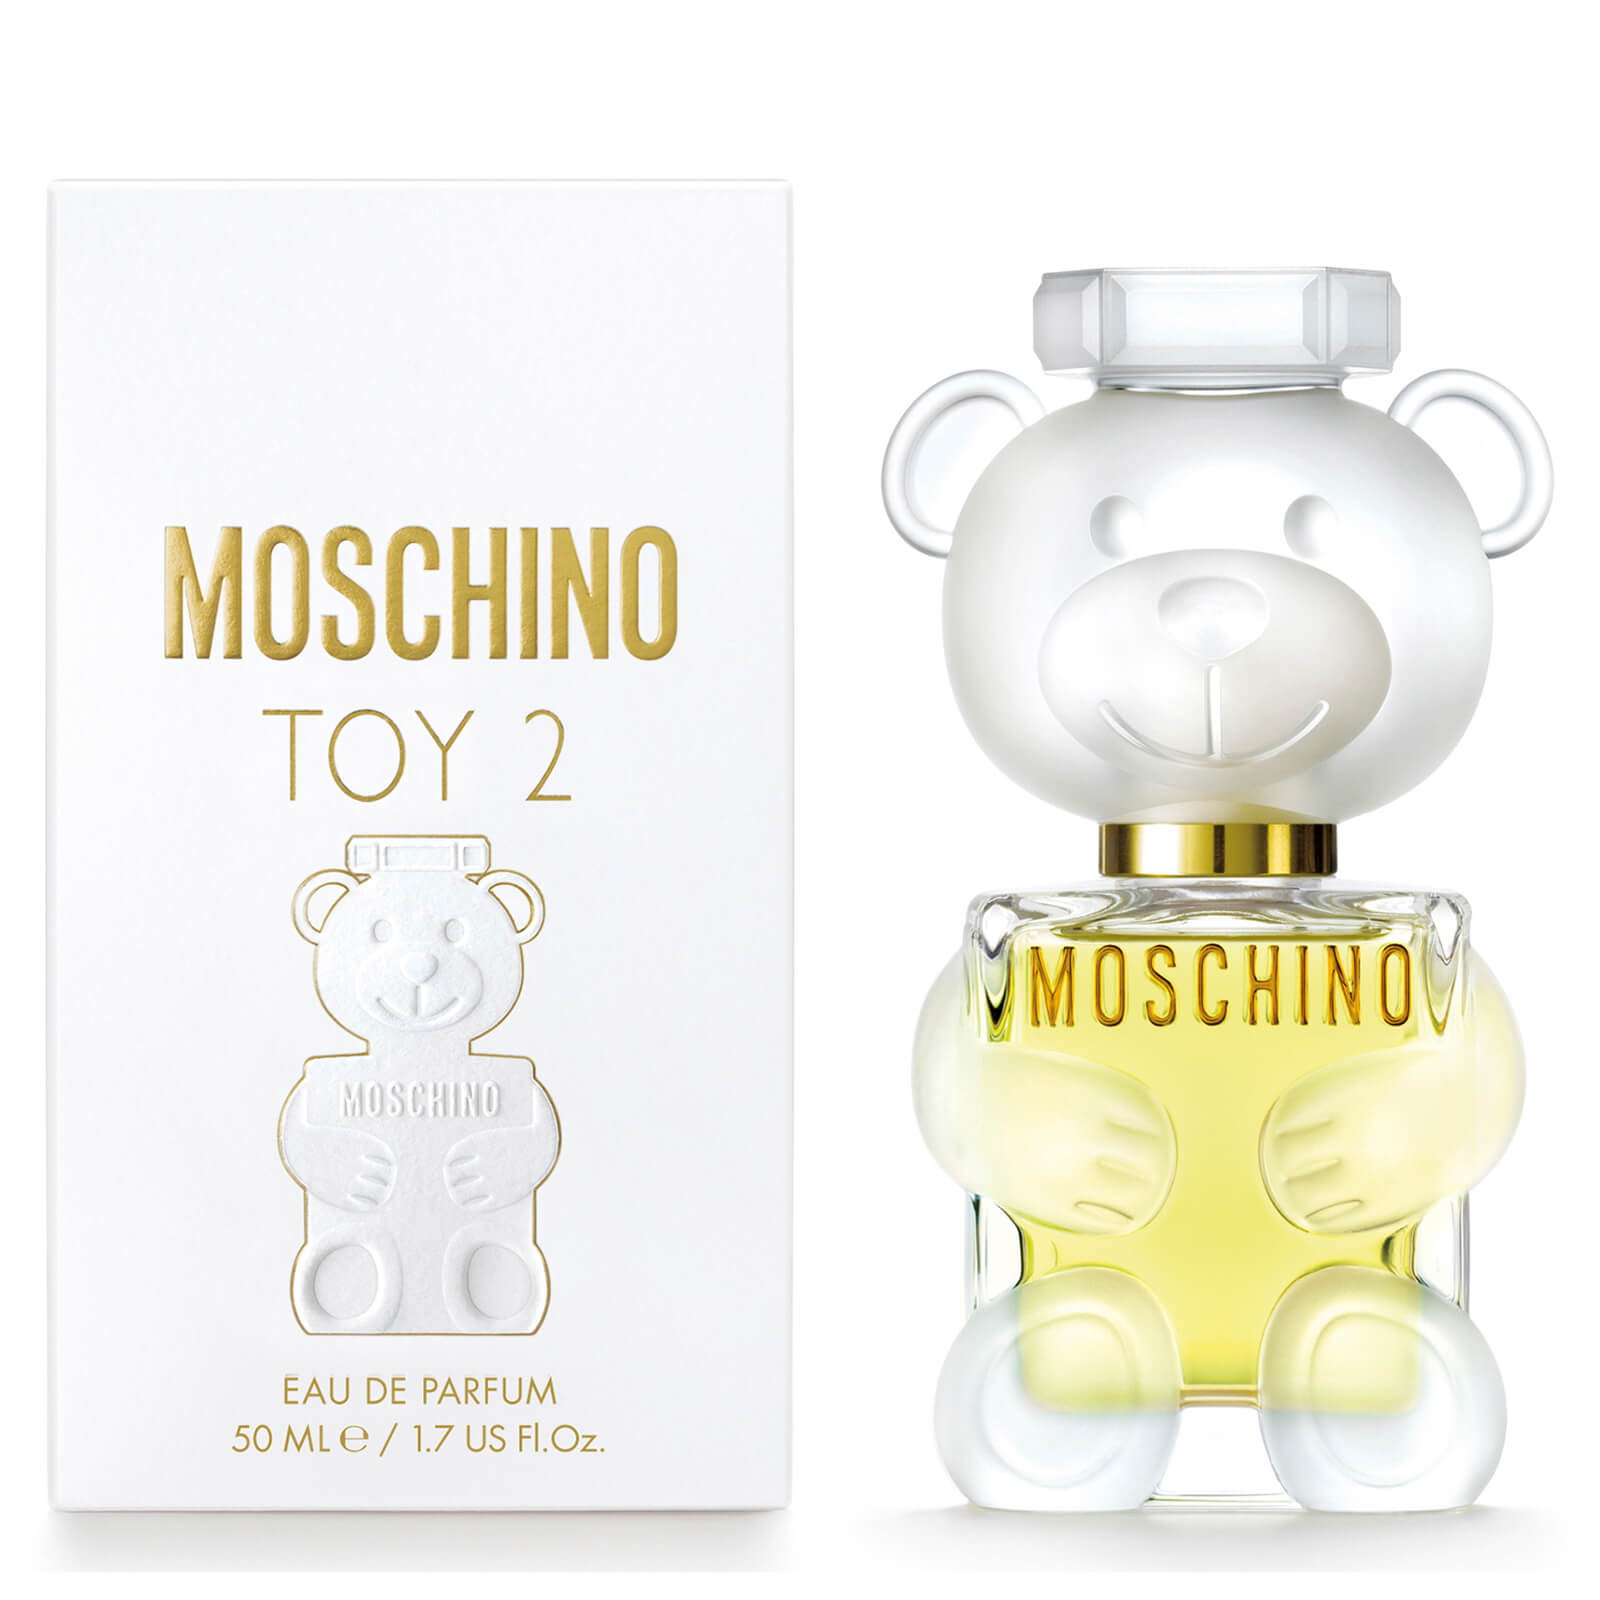 moschino toy 1 perfume